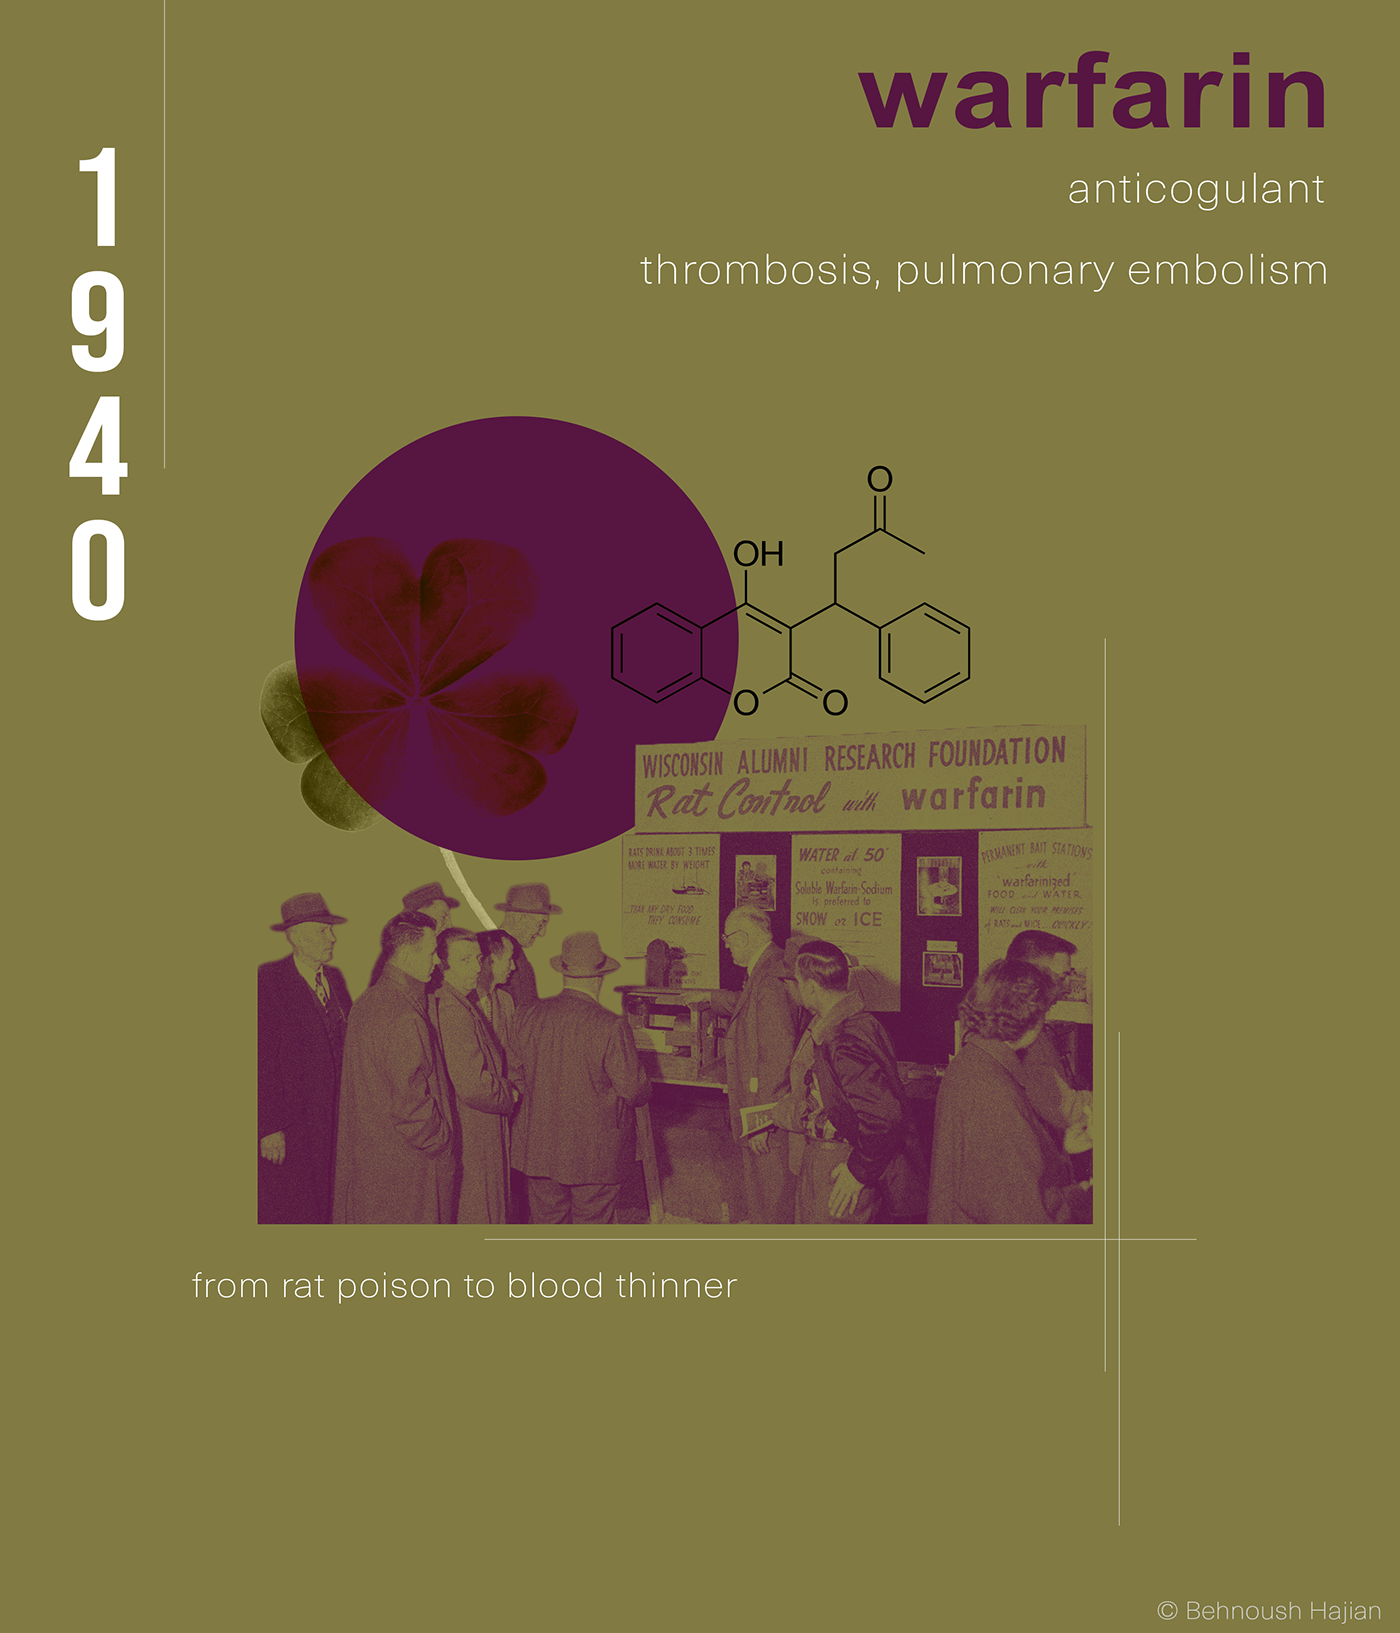 biology chemistry design Education Health medicine Pharmaceutical science scientific illustration scientific poster